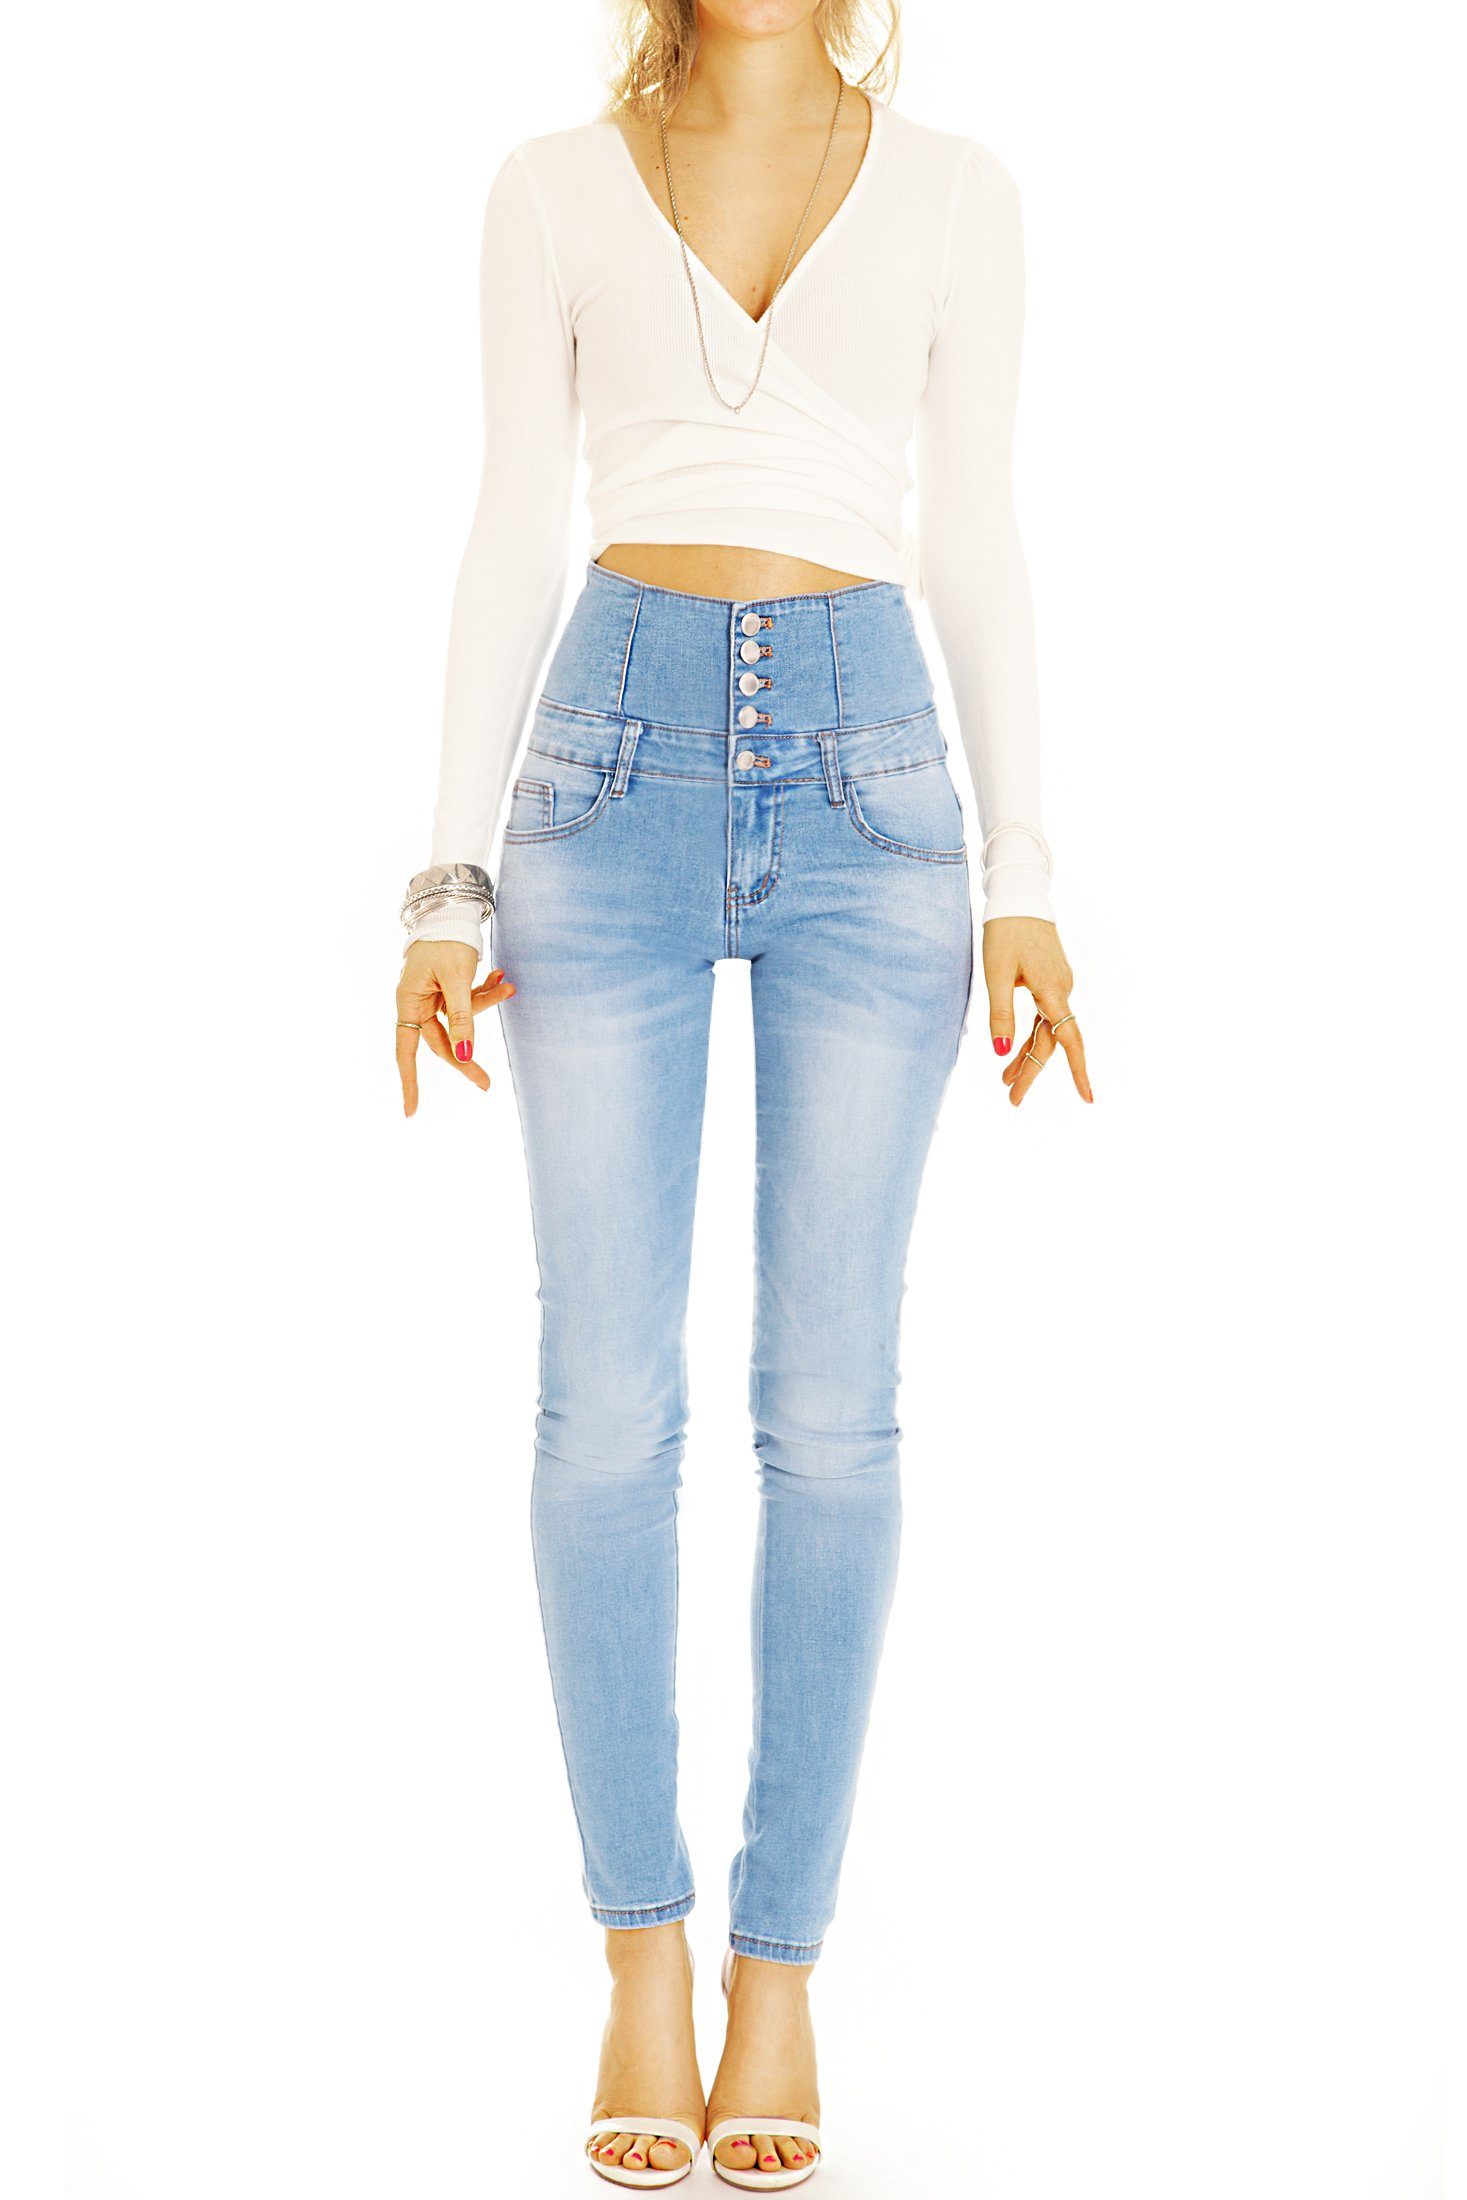 Waist Röhrenjeans - Waist be Damen Stretch-Anteil, - langer High-waist-Jeans High Knopfleiste 5-Pocket-Style, j35p Jeans styled mit High mit